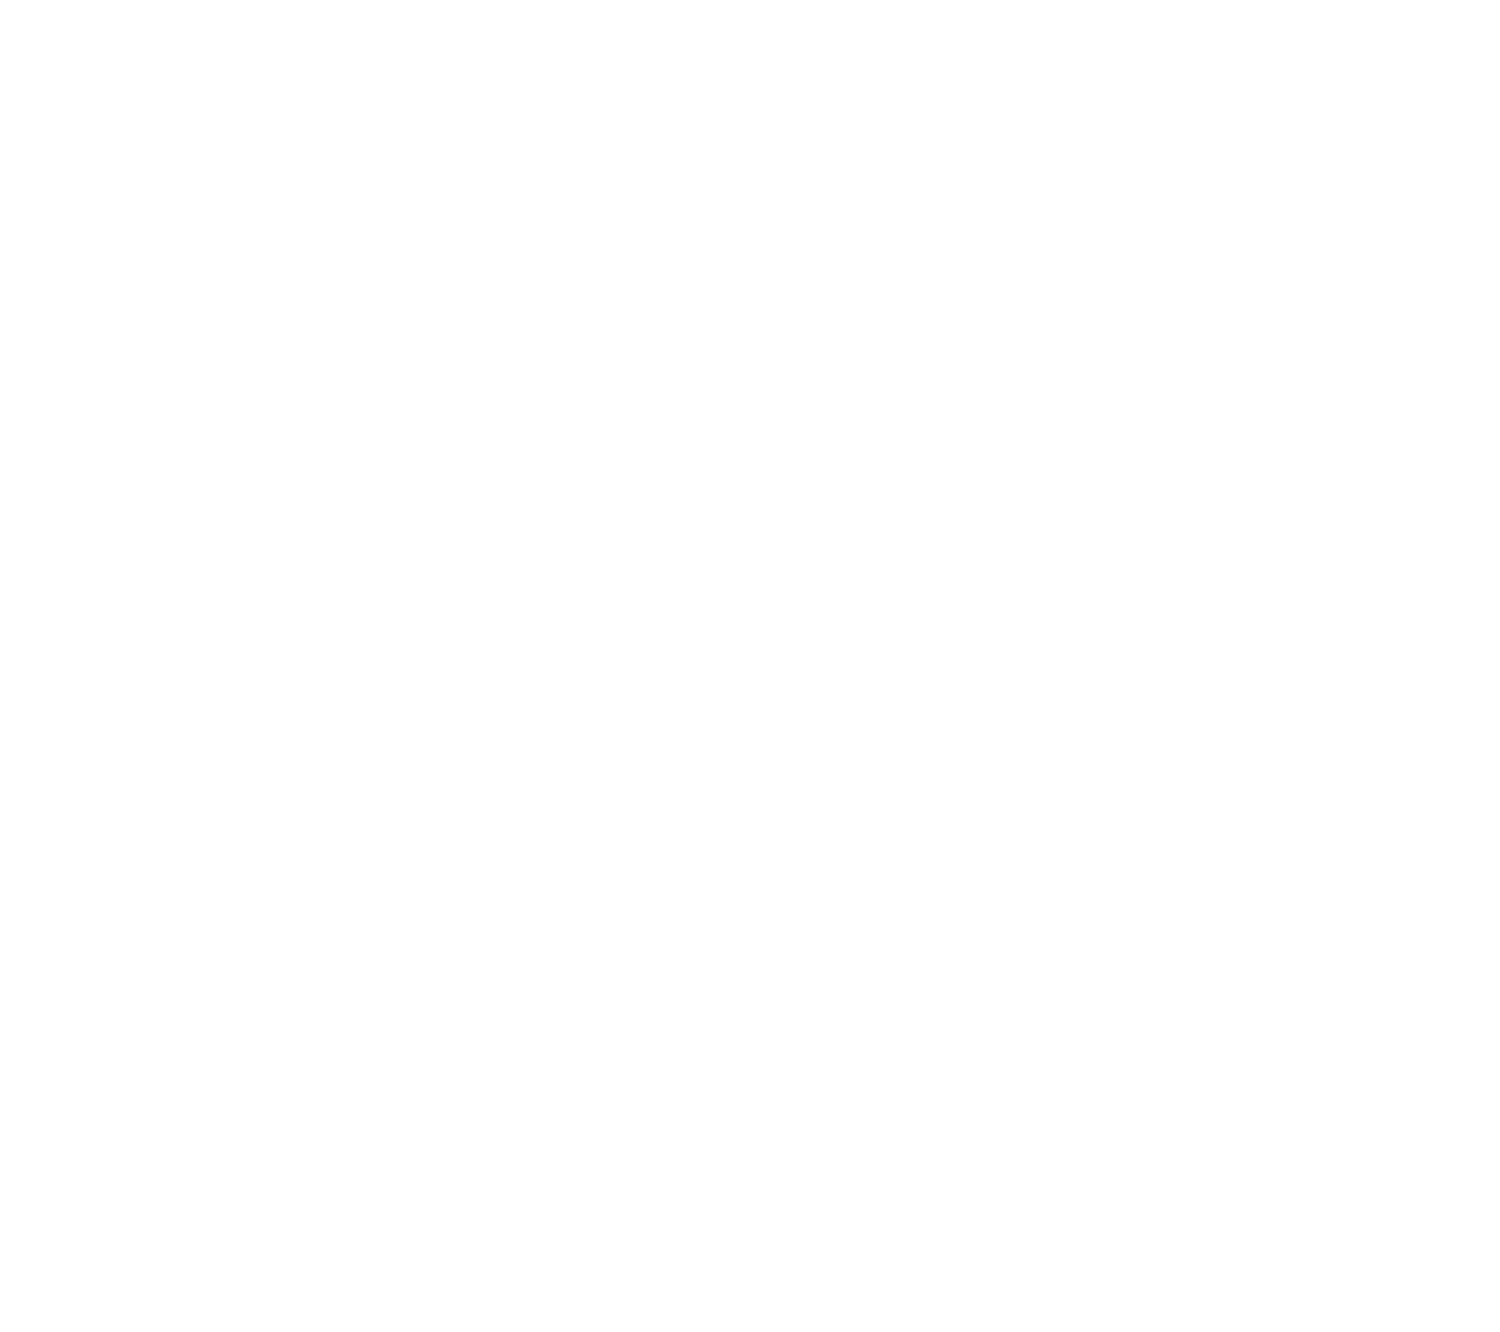 Creative Harbor